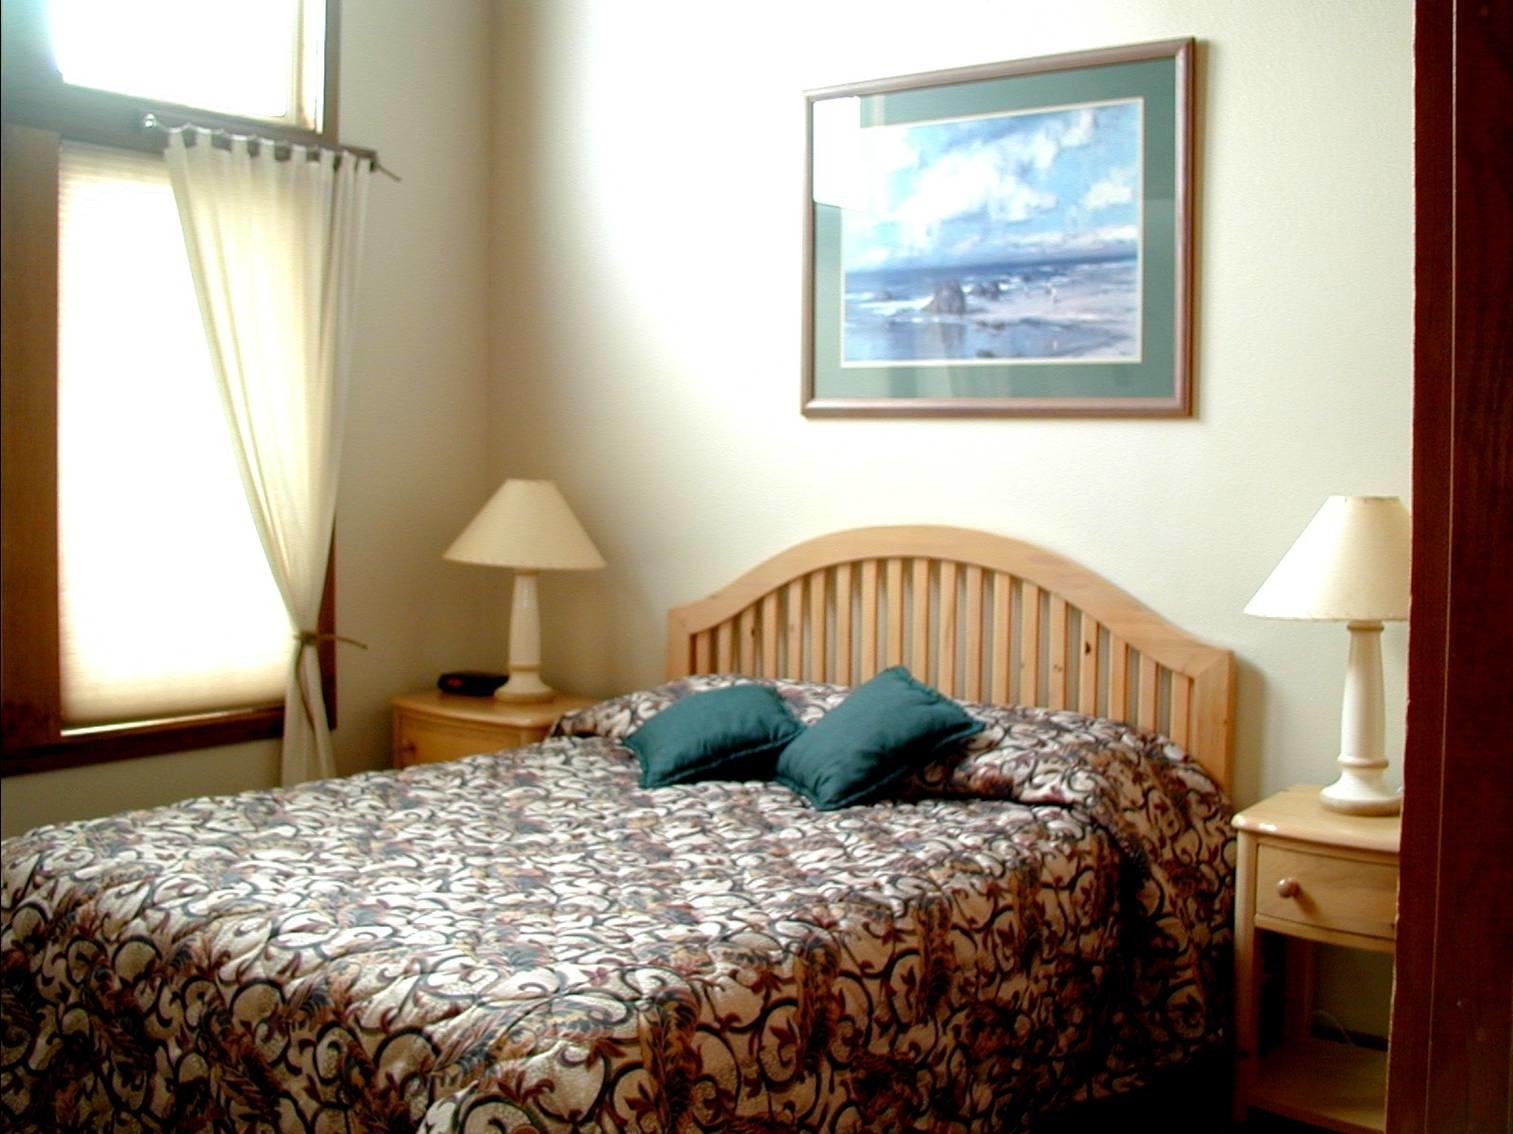 Bedroom at Point Brown Resort